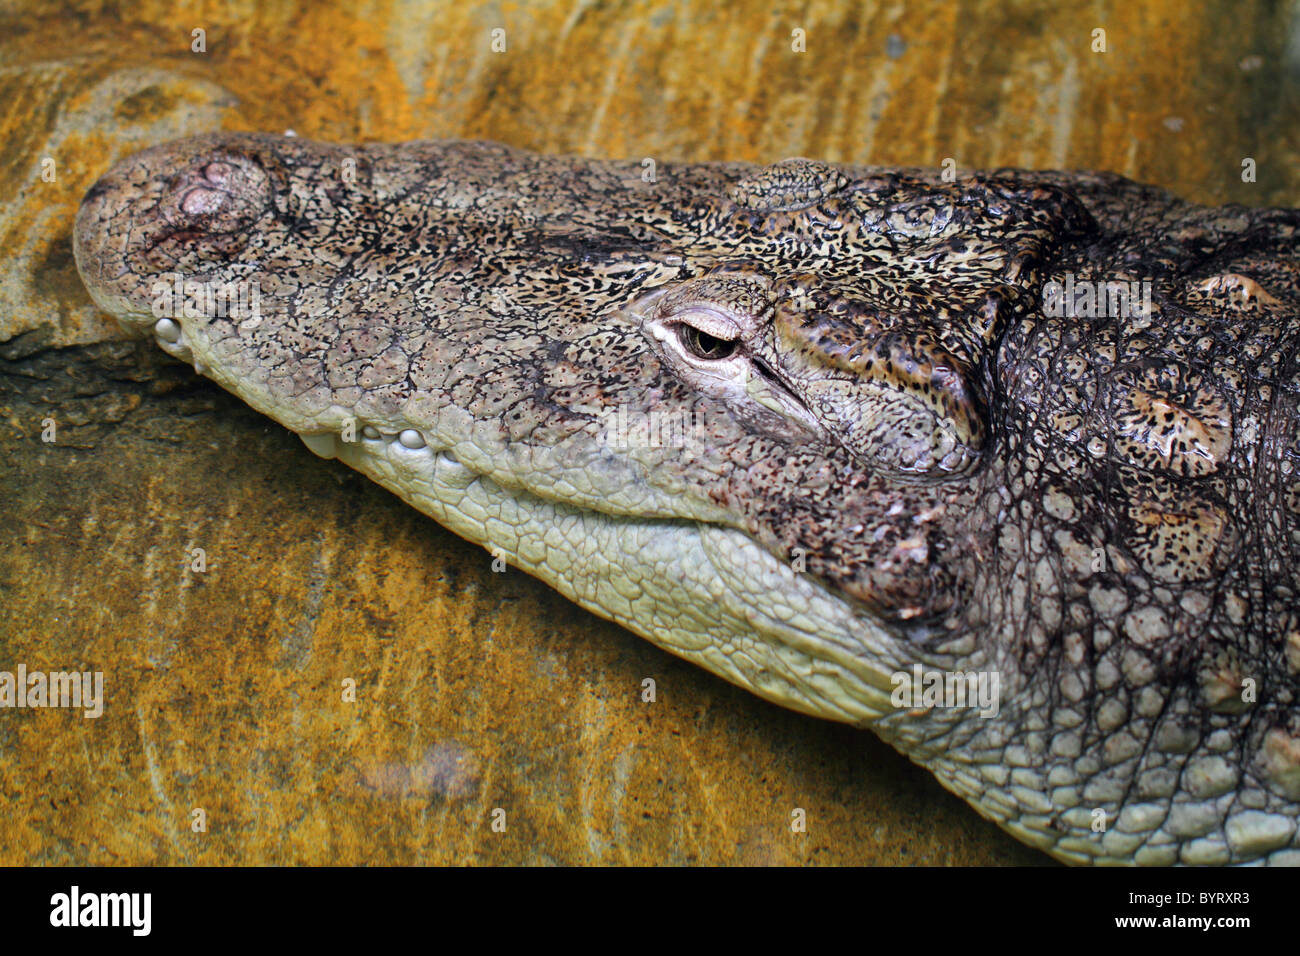 Crocodile dangerous reptile danger hazard Crocodylus niloticus Stock Photo